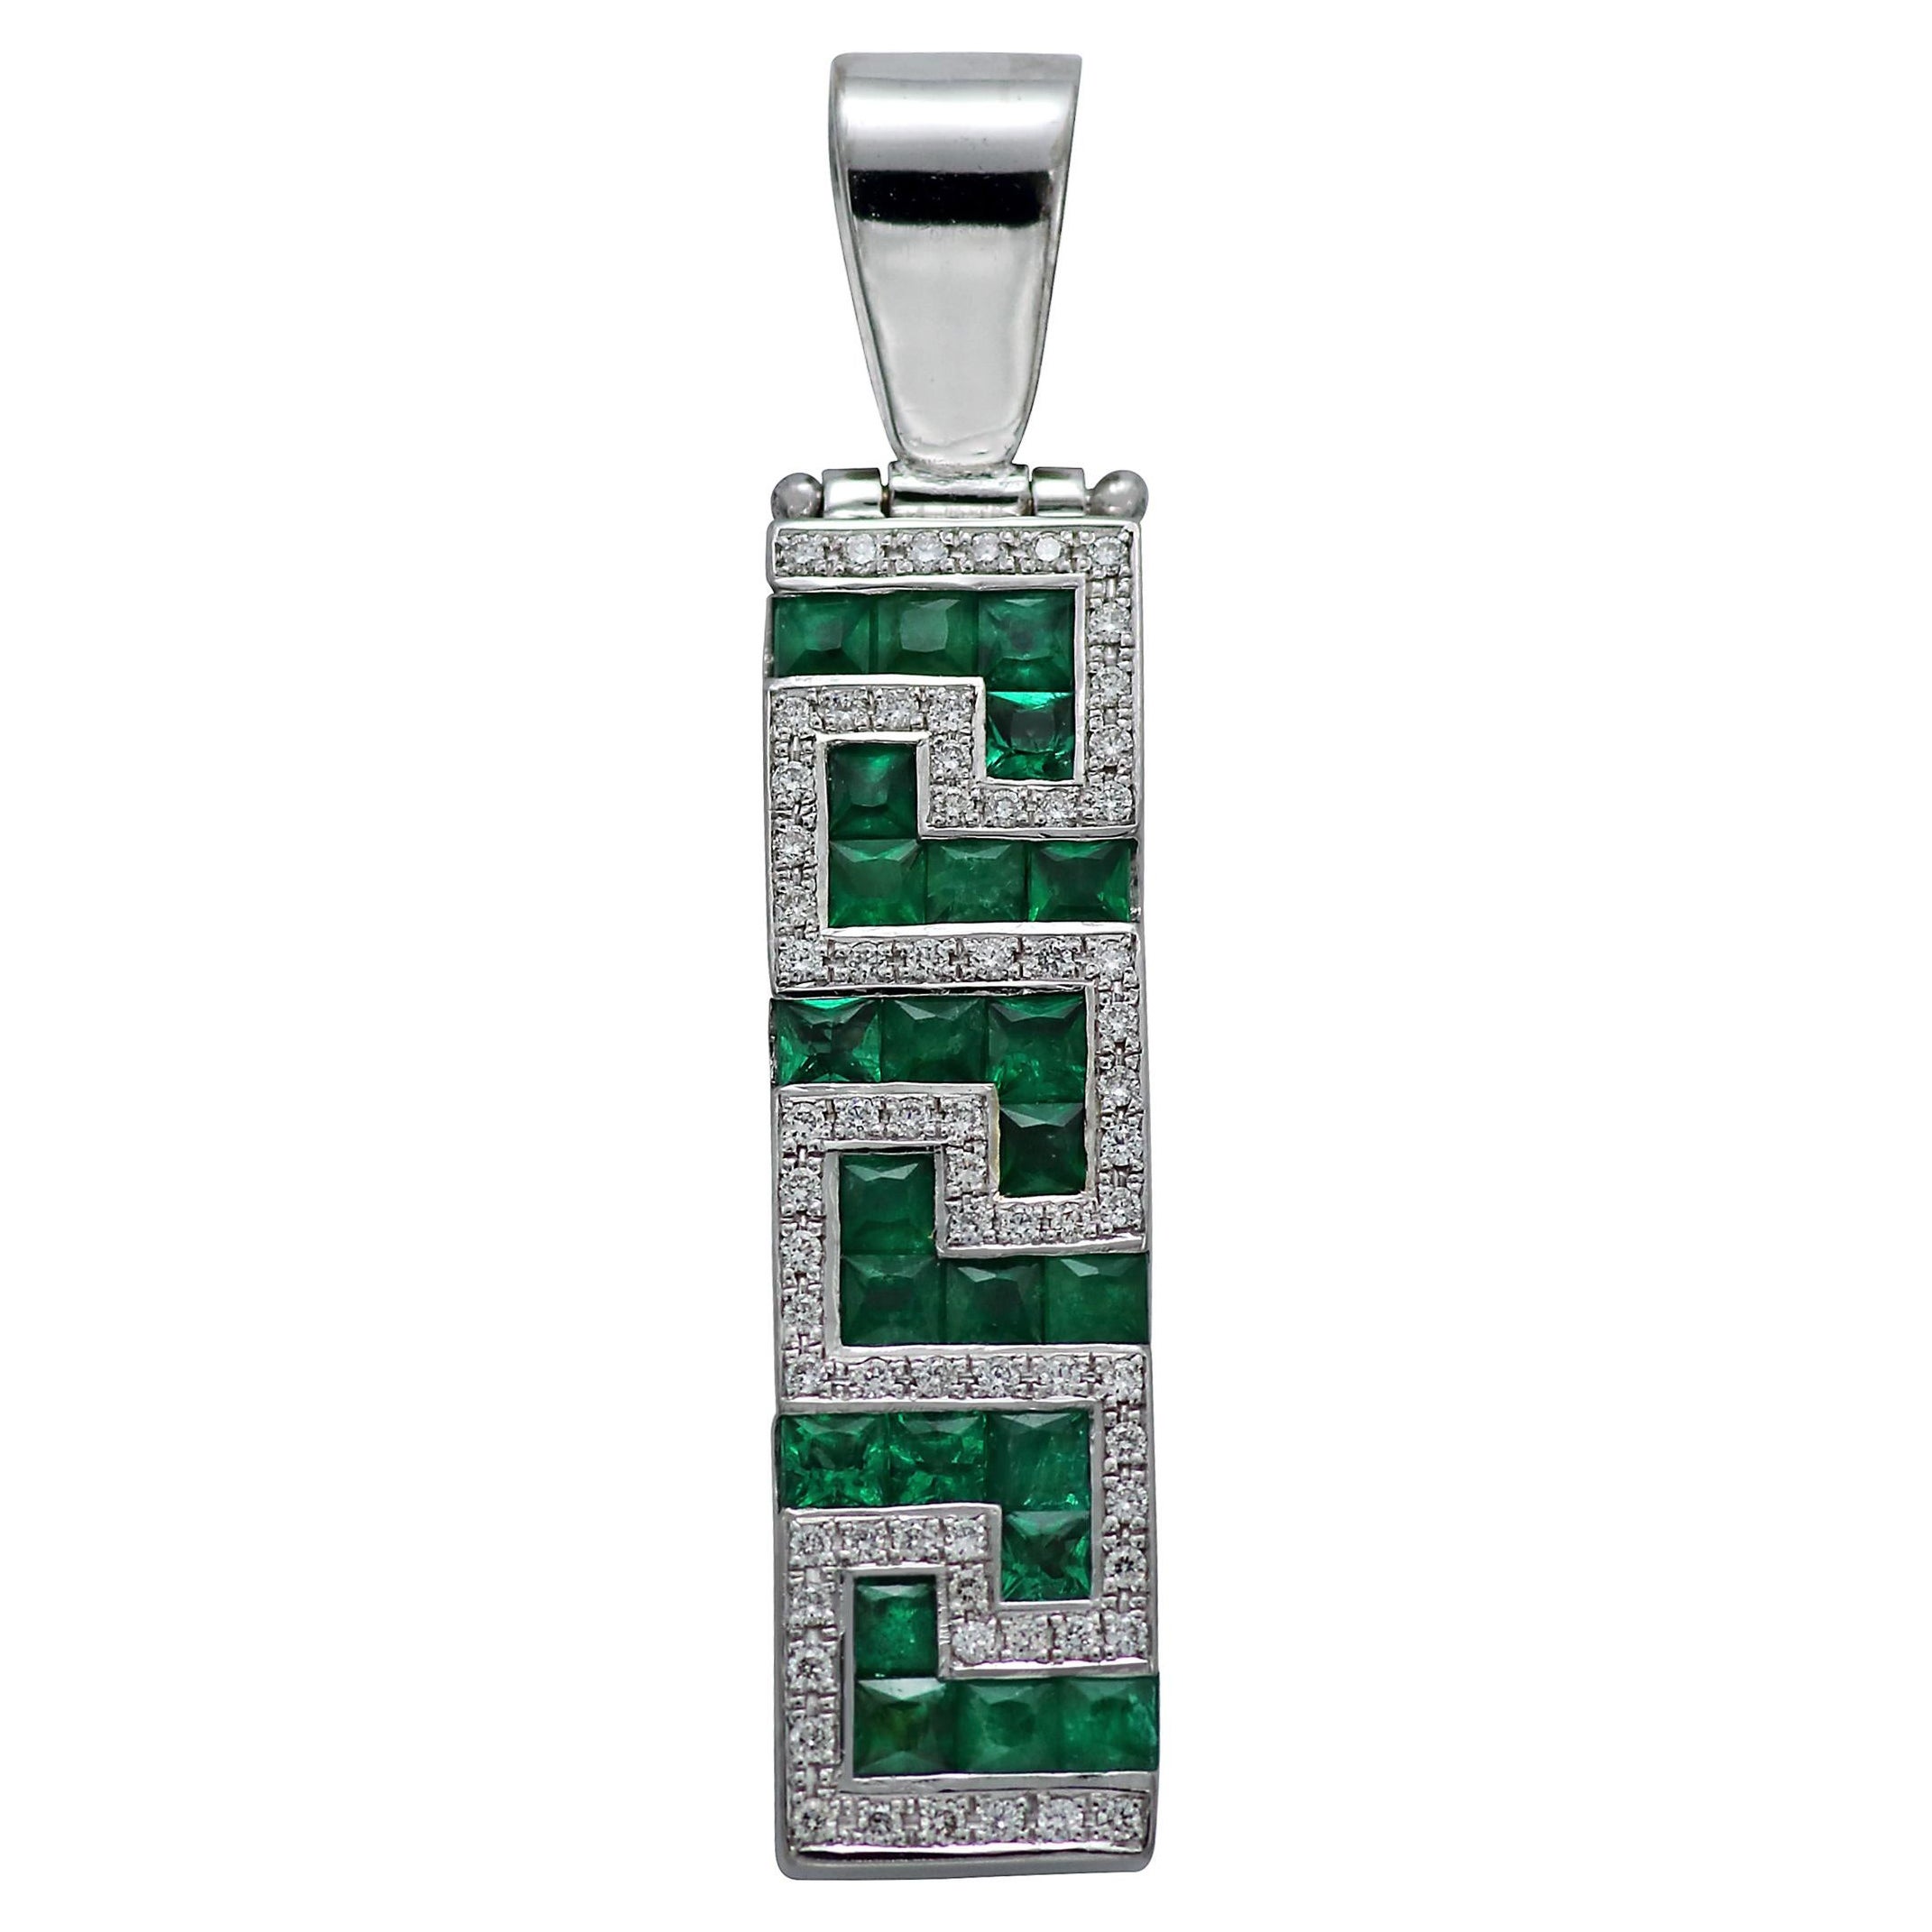 Dimos 18k White Gold Greek Key Pendant with Emeralds